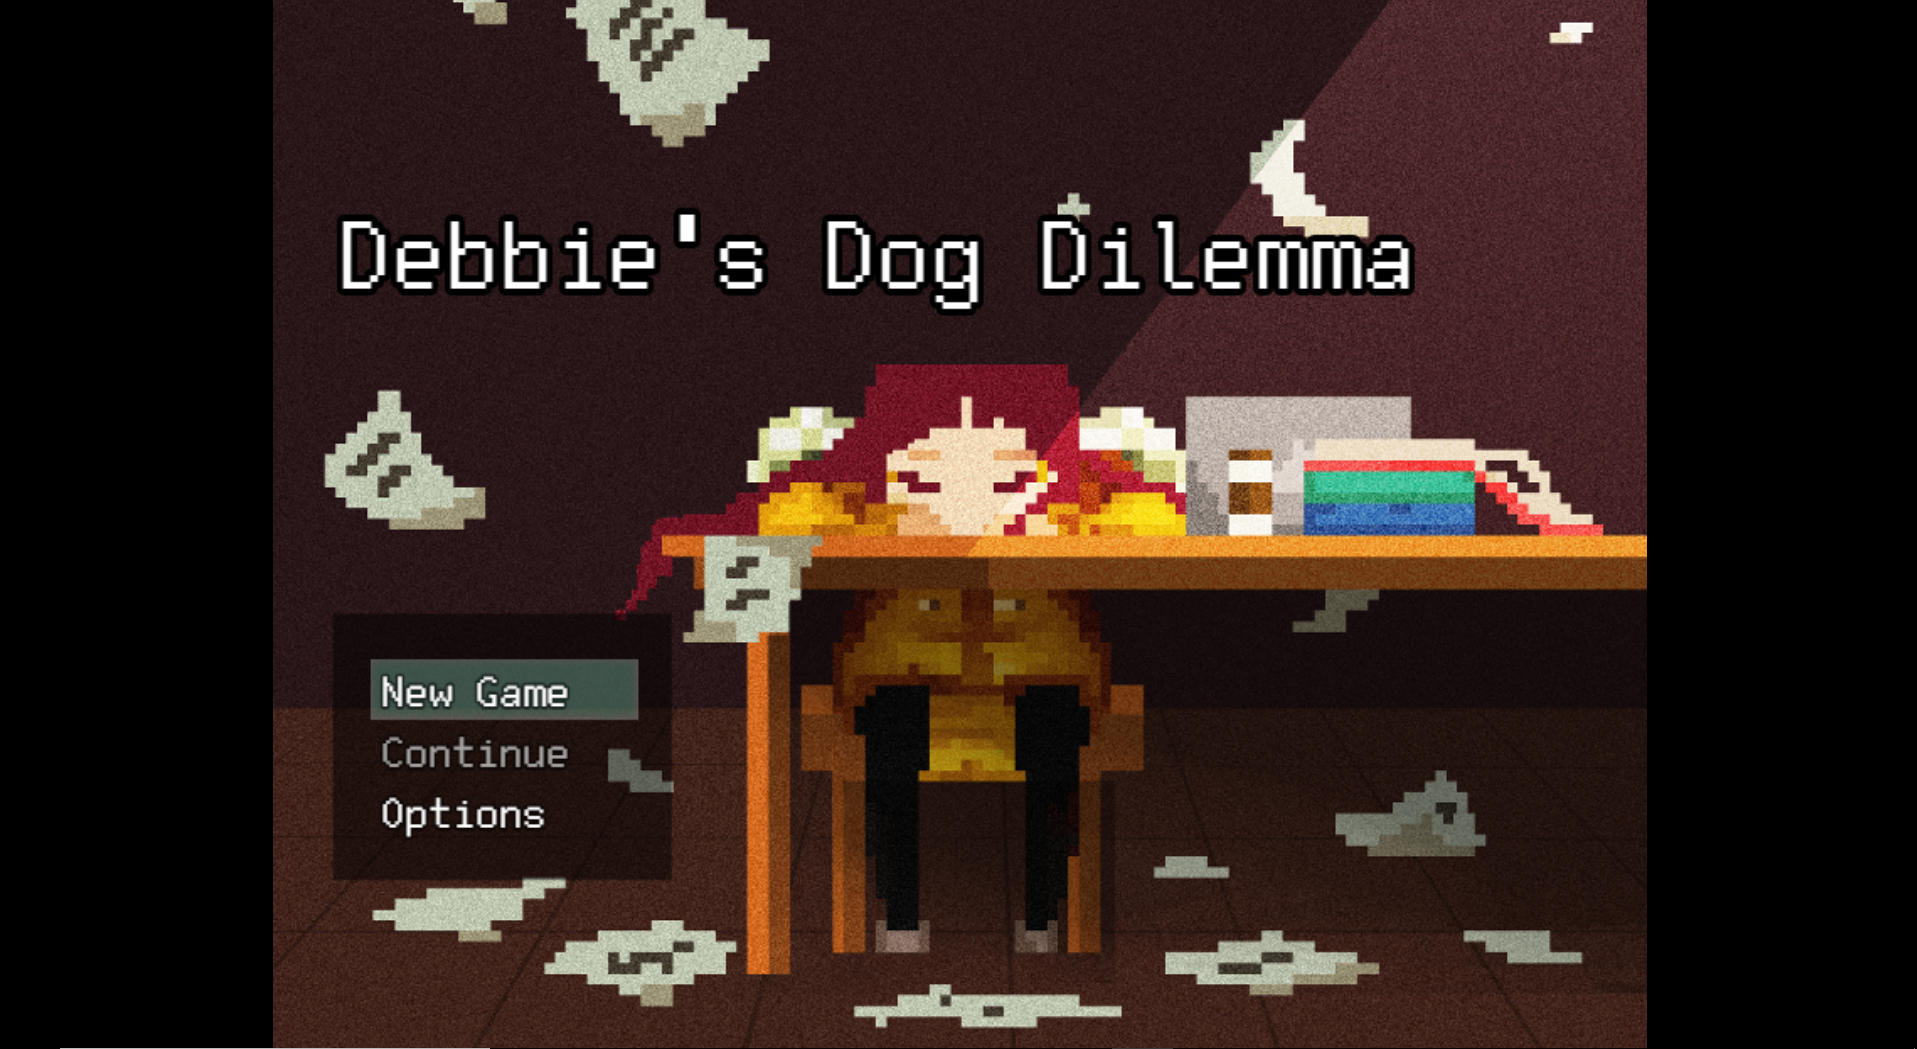 Debbie's Dog Dilemma